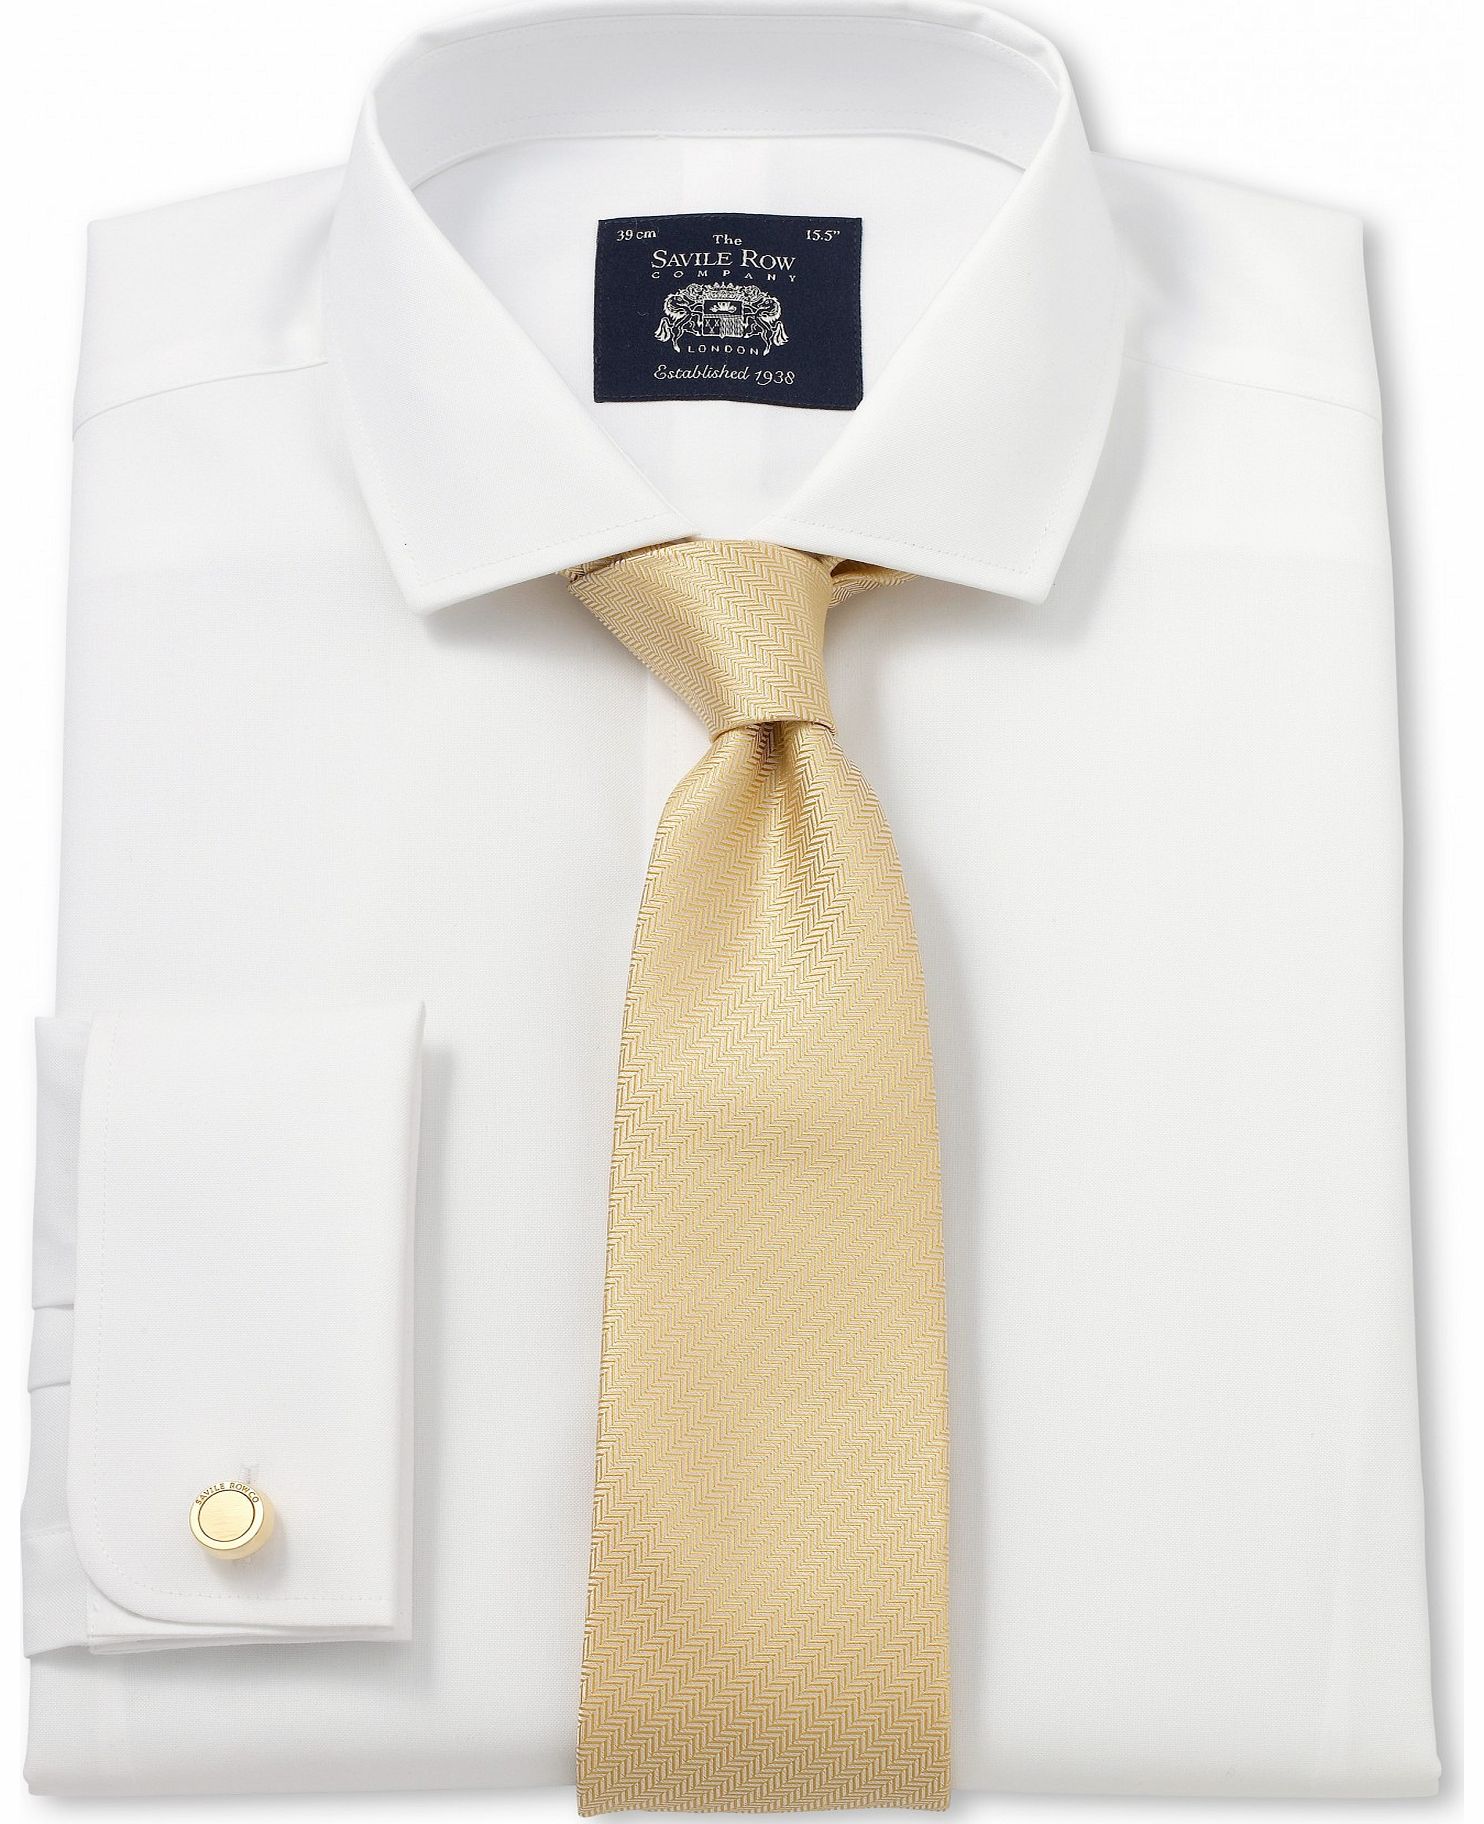 Savile Row Company White Poplin Non Iron Extra Slim Fit Shirt 14